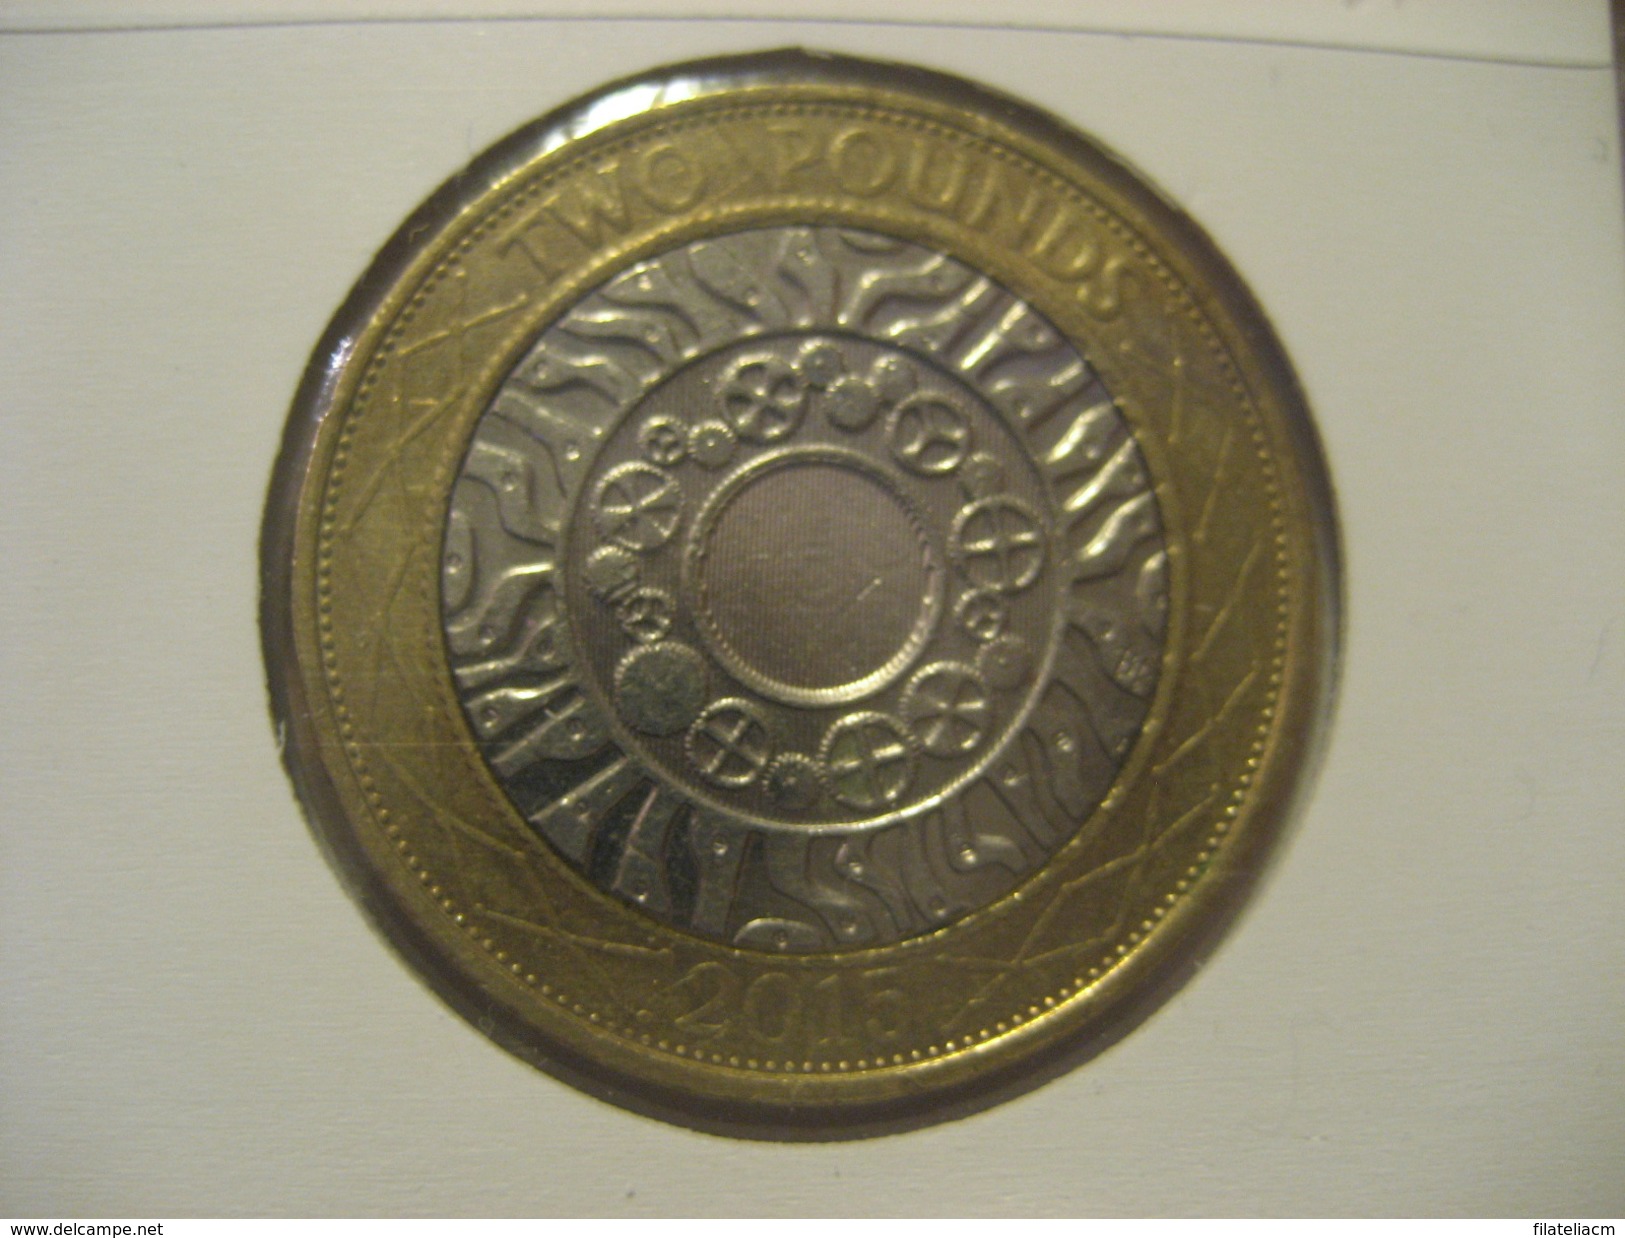 2 Pounds 2015 ENGLAND Great Britain QE II Good Condition Bimetallic Coin - 2 Pond